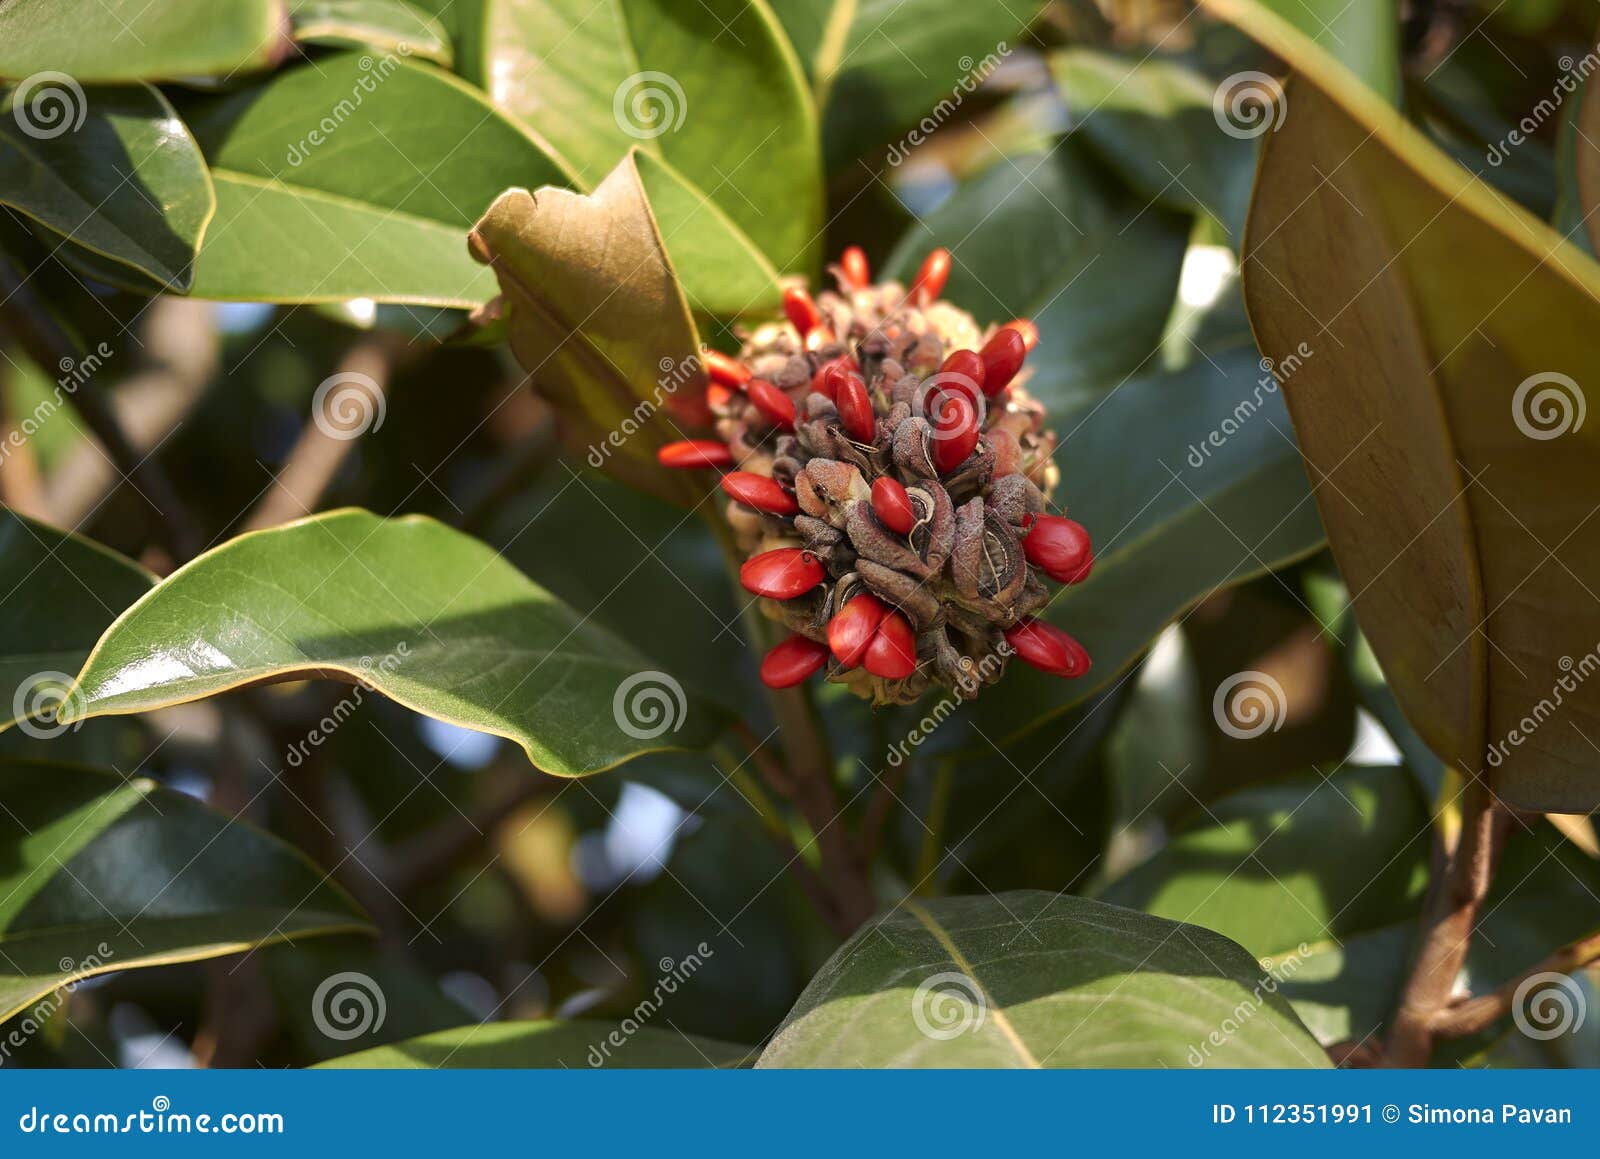 Magnolia Grandiflora Fruits Stock Image - Image of garden ...